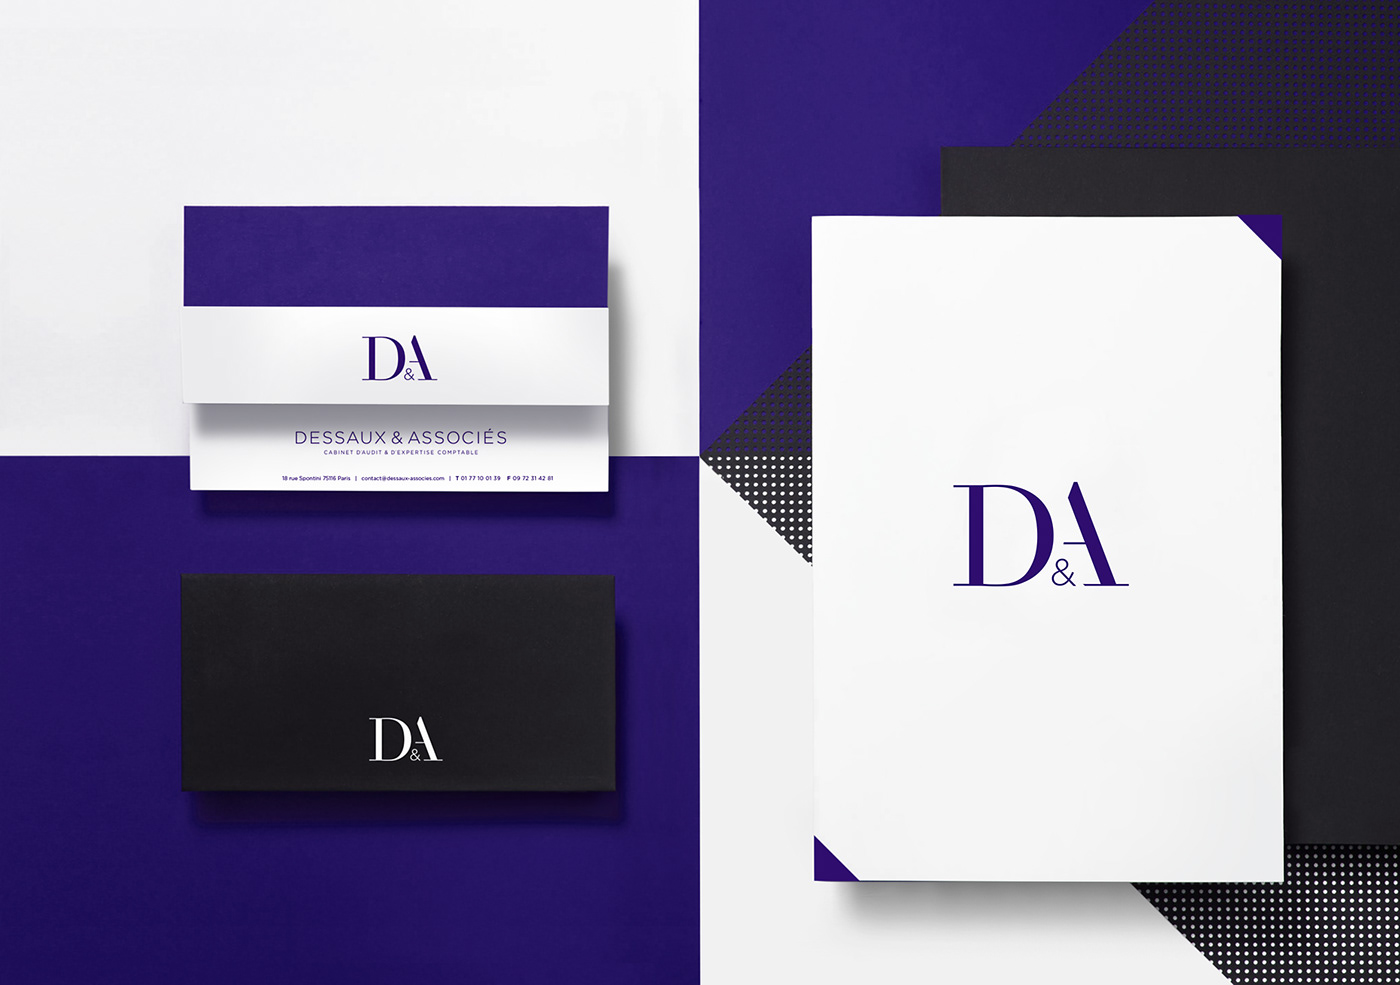 identity corporate business expert comptable audit brand identity graphic design  Logo Design visual identity